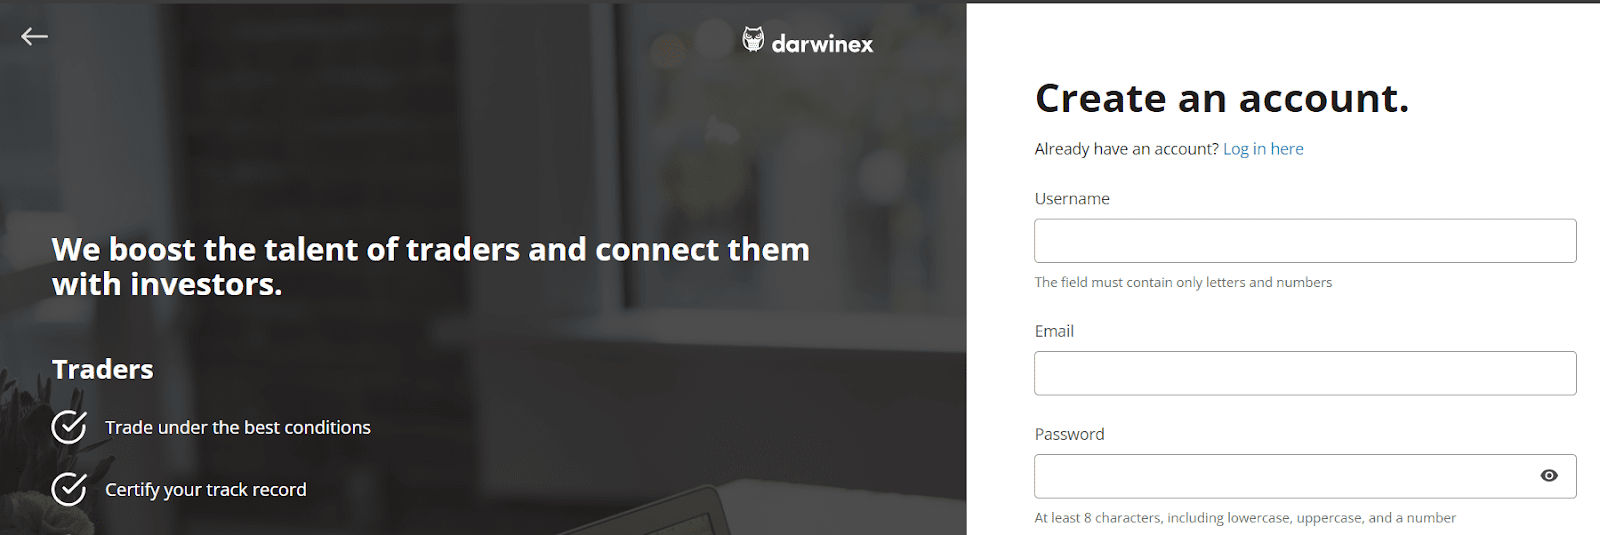 Review of Darwinex User Account — Start of registration